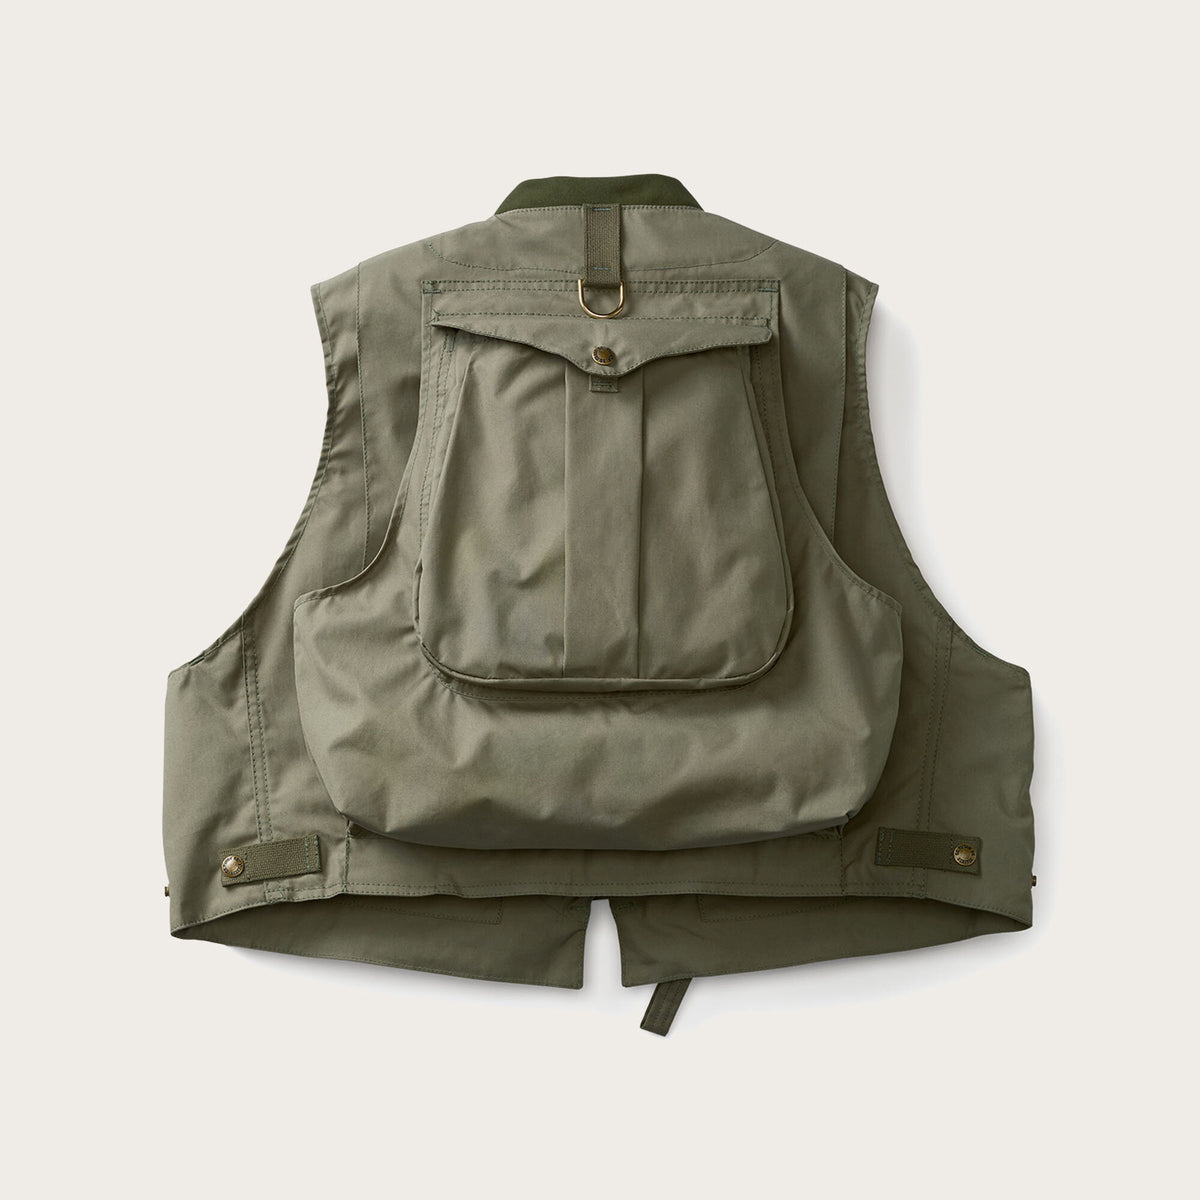 Filson Fly Fishing Guide Vest, For Men, Green Vests